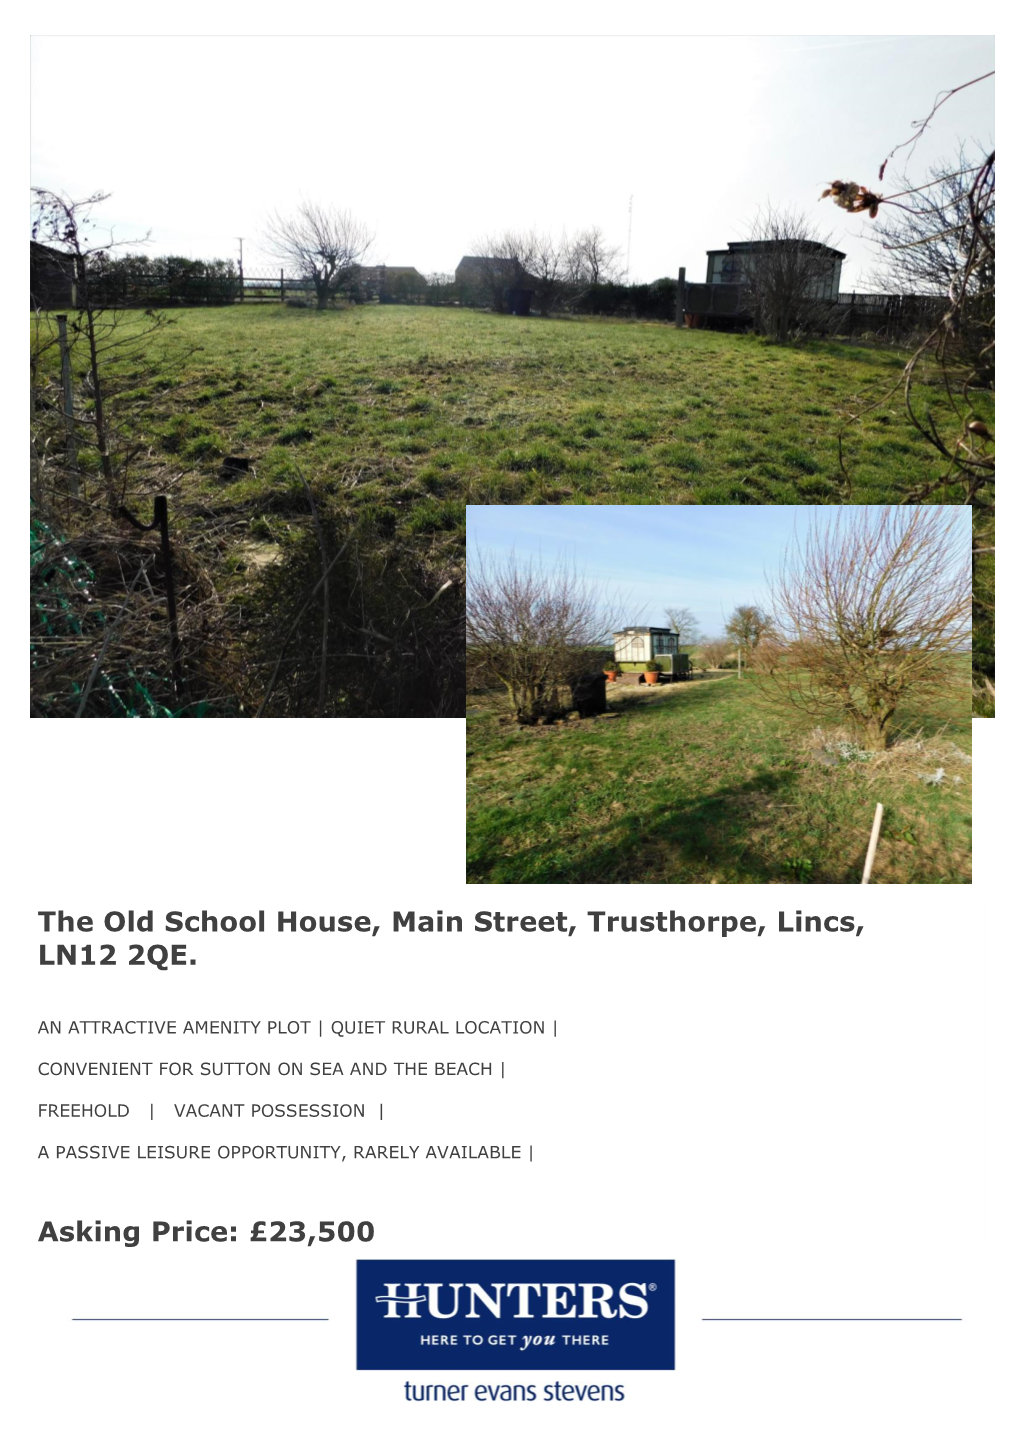 The Old School House, Main Street, Trusthorpe, Lincs, LN12 2QE